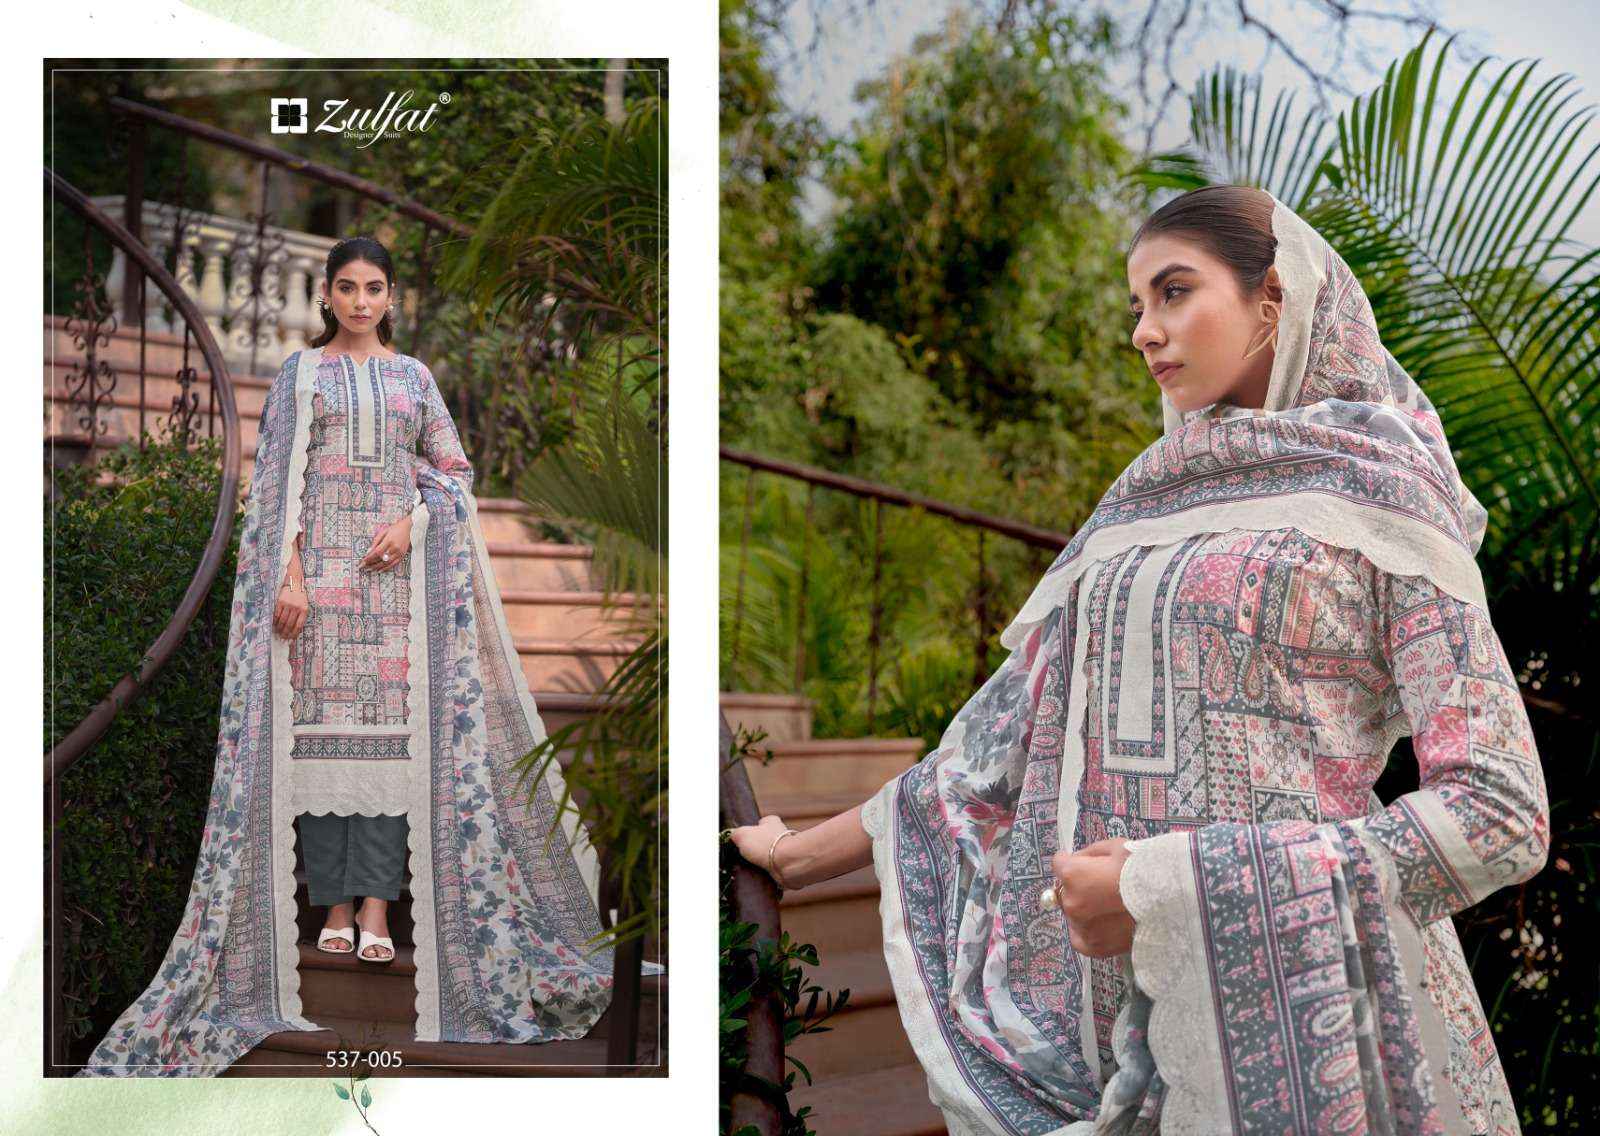 Zulfat Maryam Vol 2 Cotton Dress Material 8 pcs Catalogue